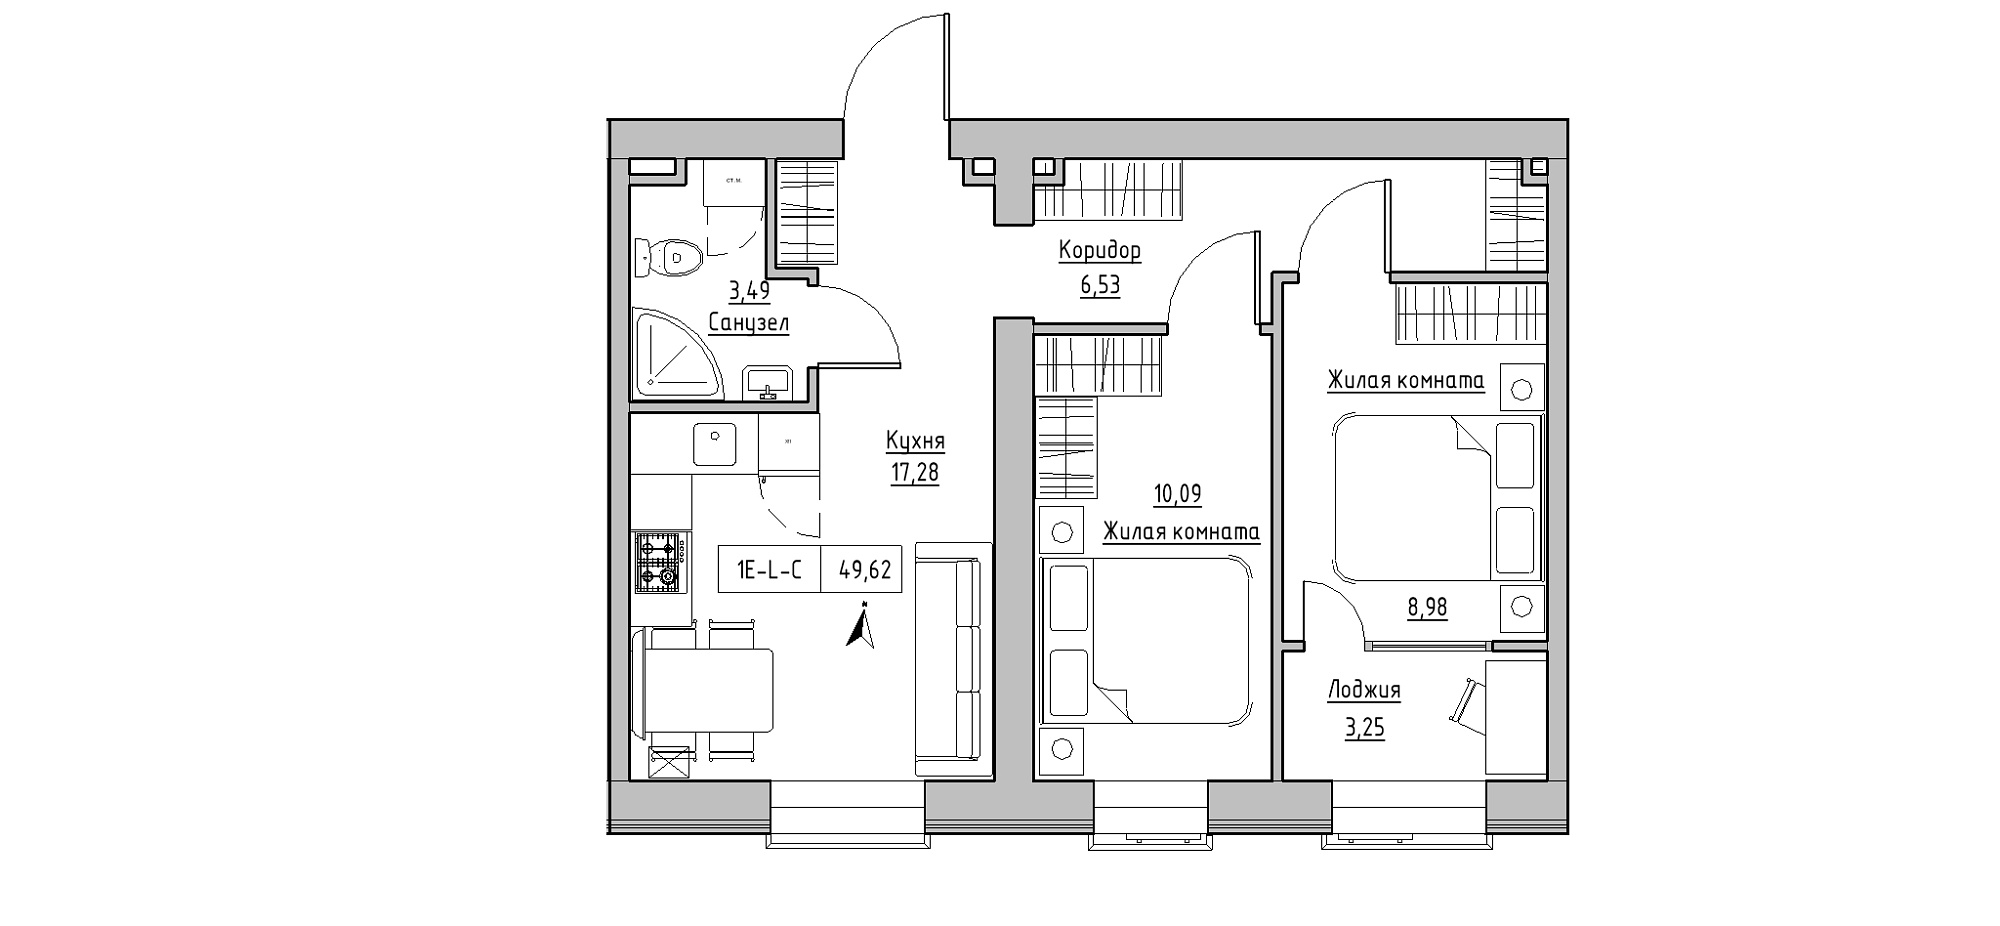 Planning 2-rm flats area 49.62m2, KS-020-01/0007.